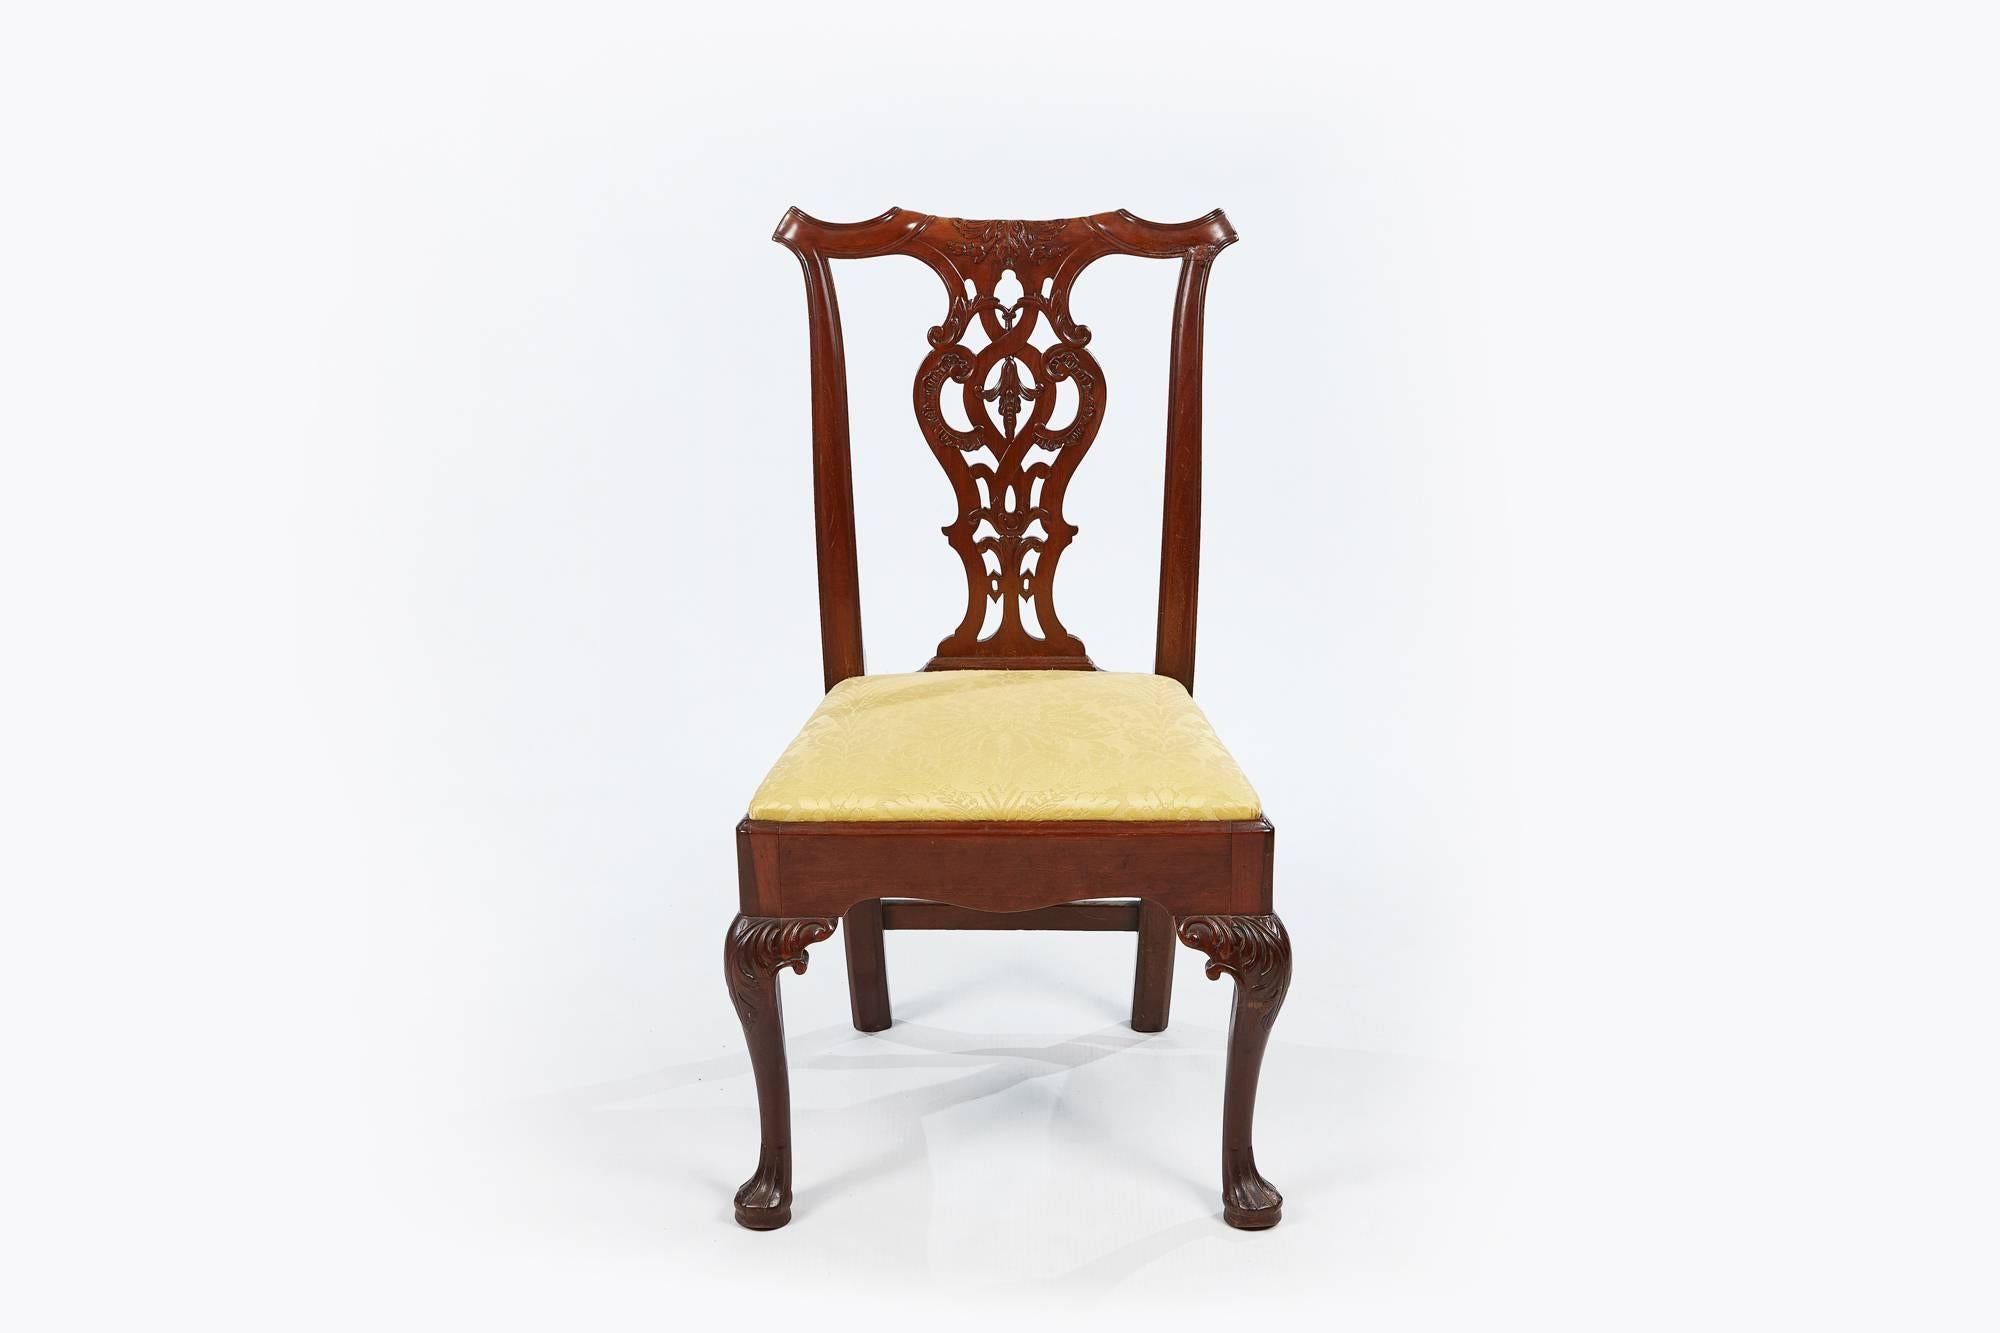 19th century furniture styles